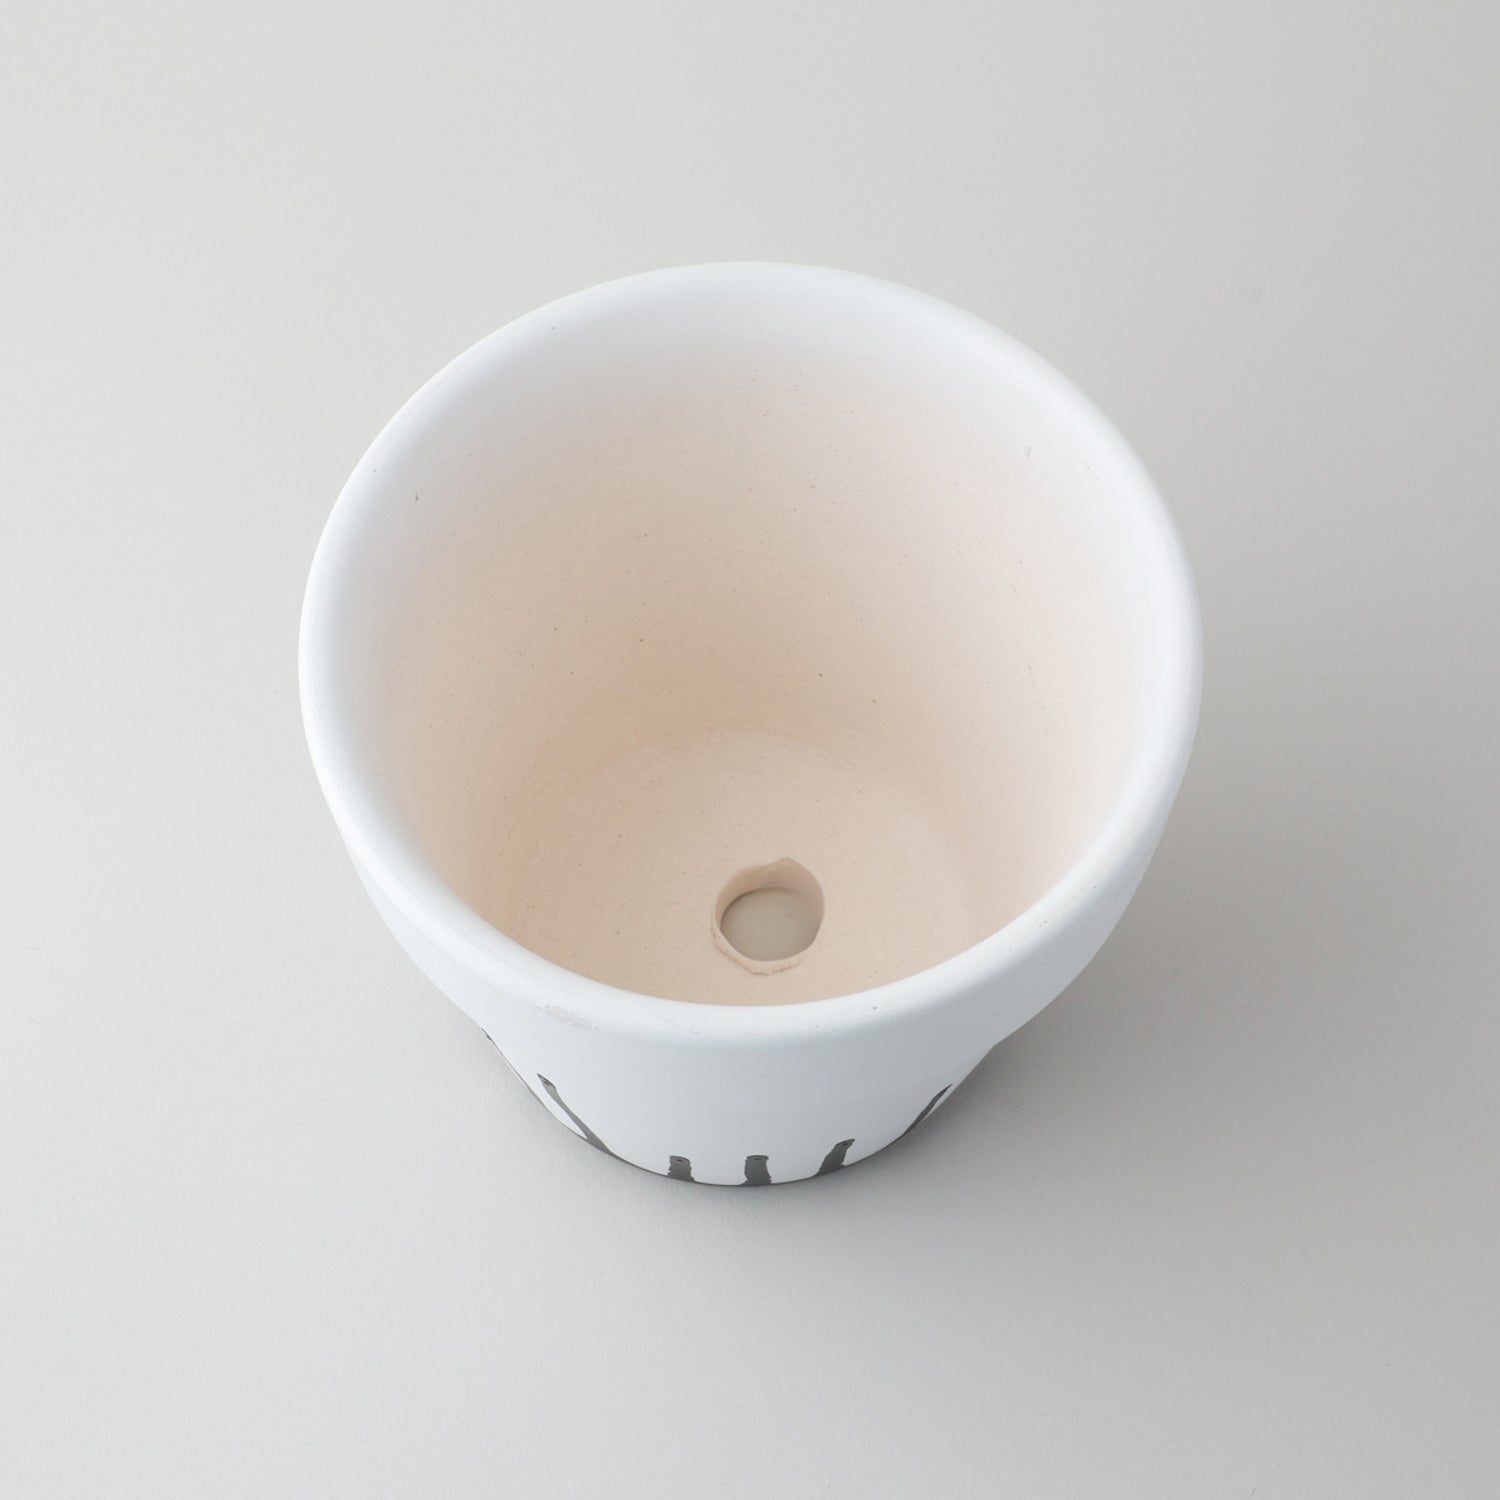 Ceramic Planter White & Black - 4x5